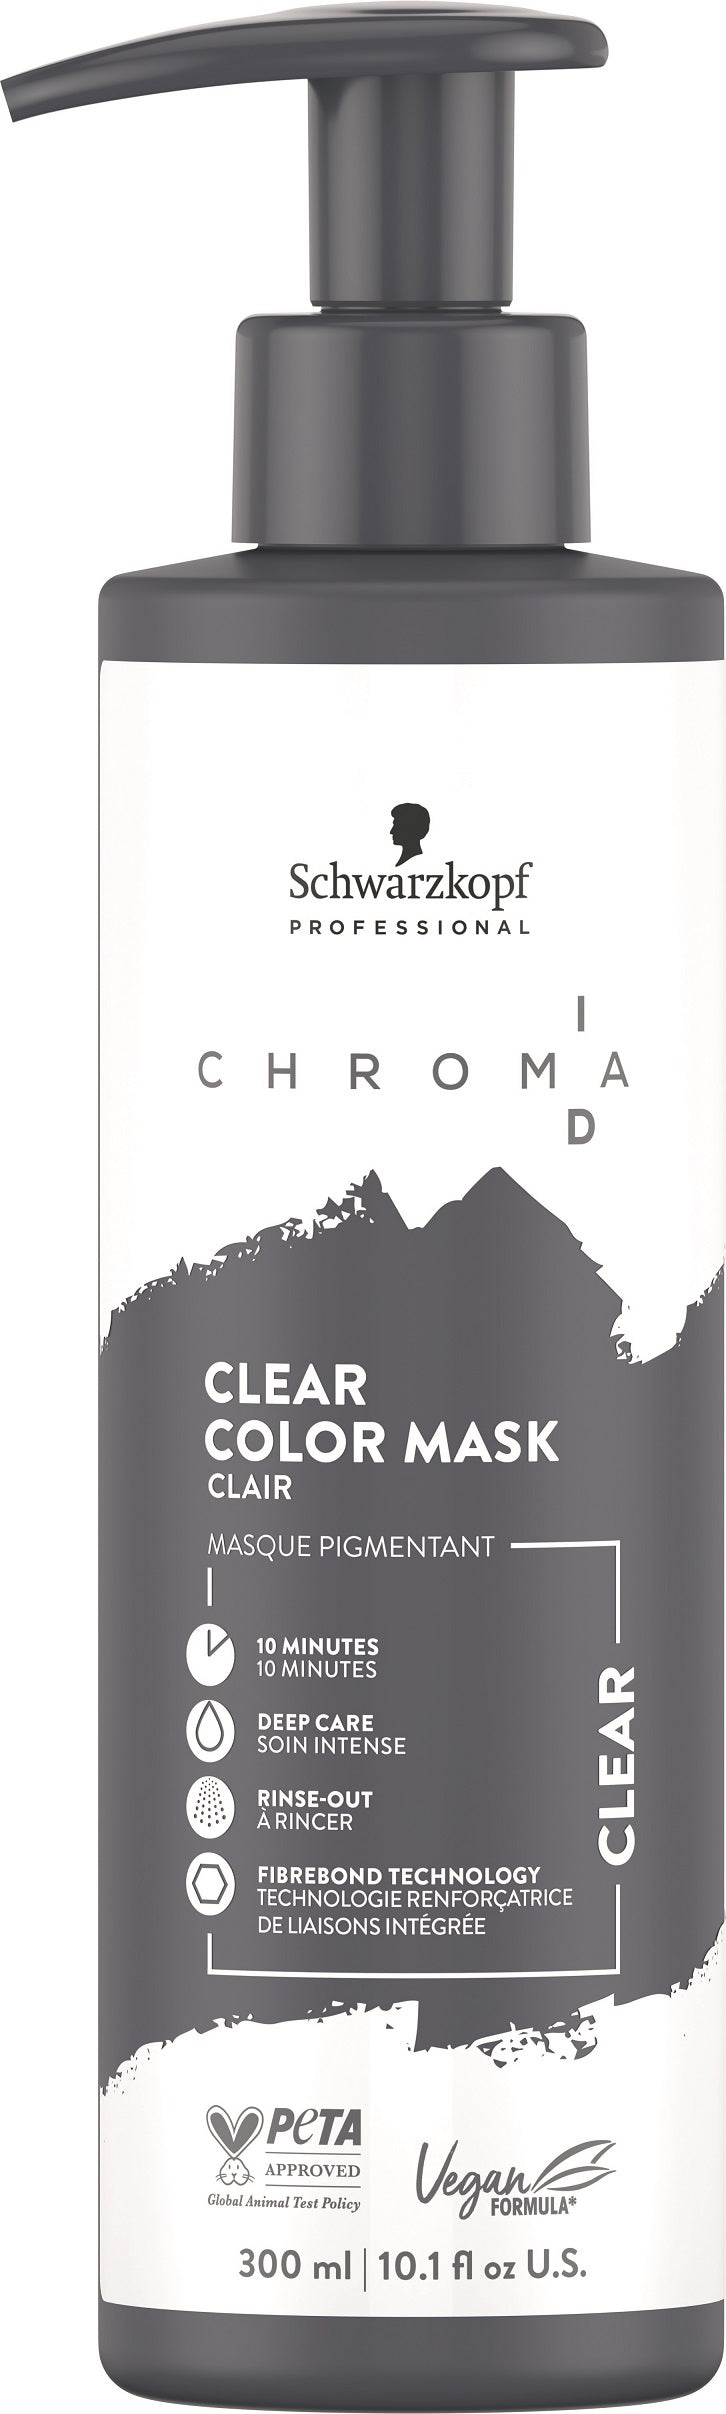 Schwarzkopf Professional Chroma ID Clear Bonding Mask at Eds Hair Bramhall